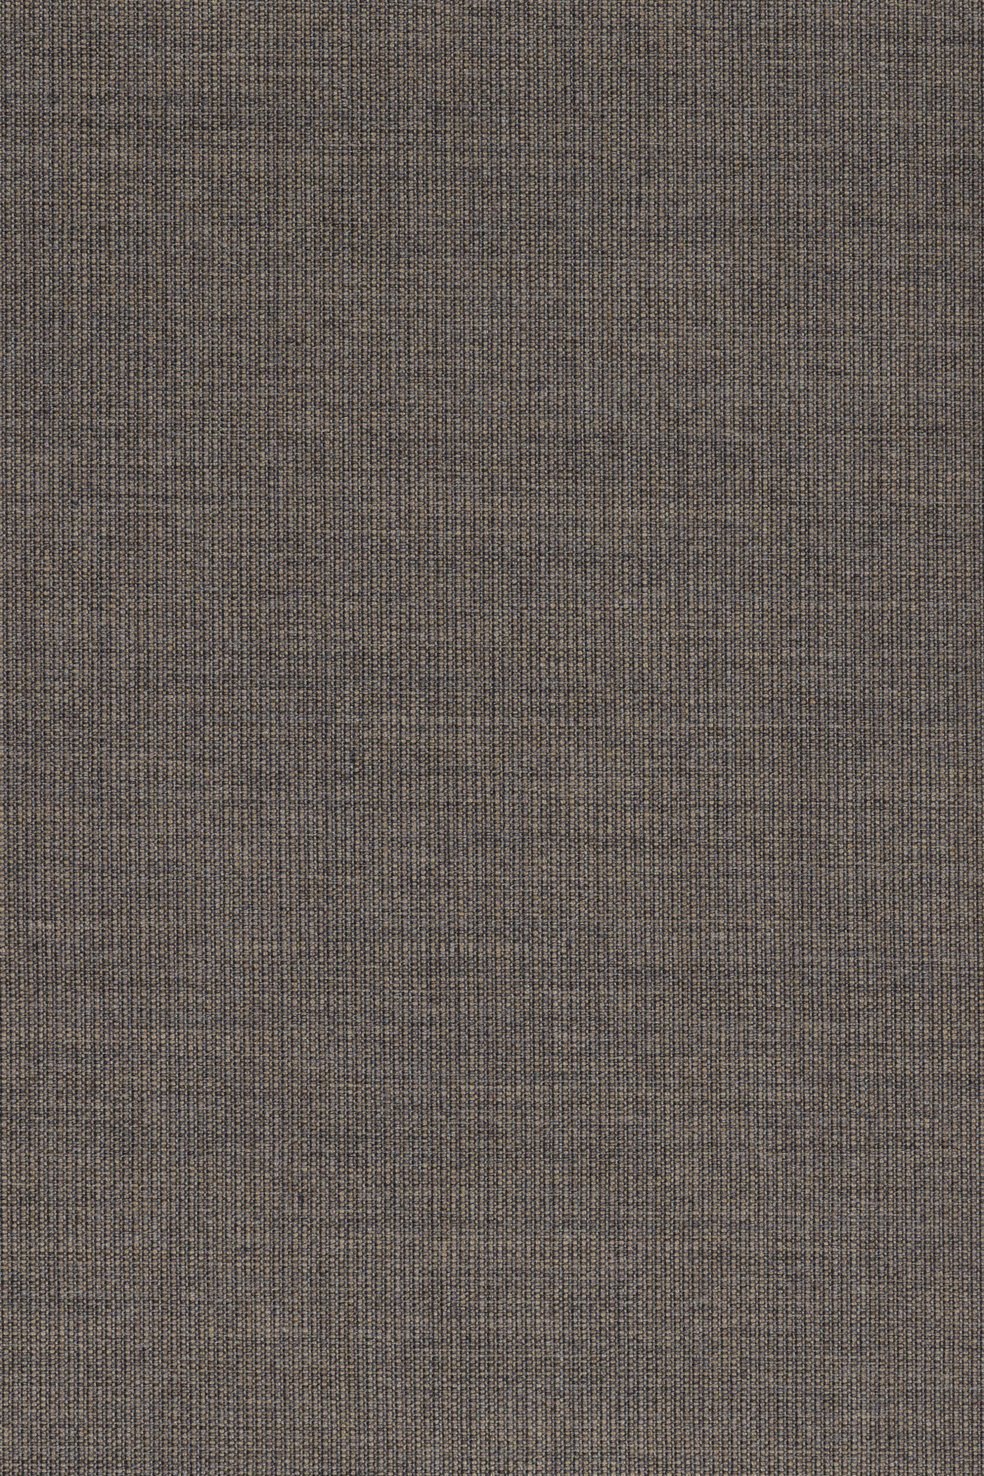 Fabric sample Canvas 2 264 grey